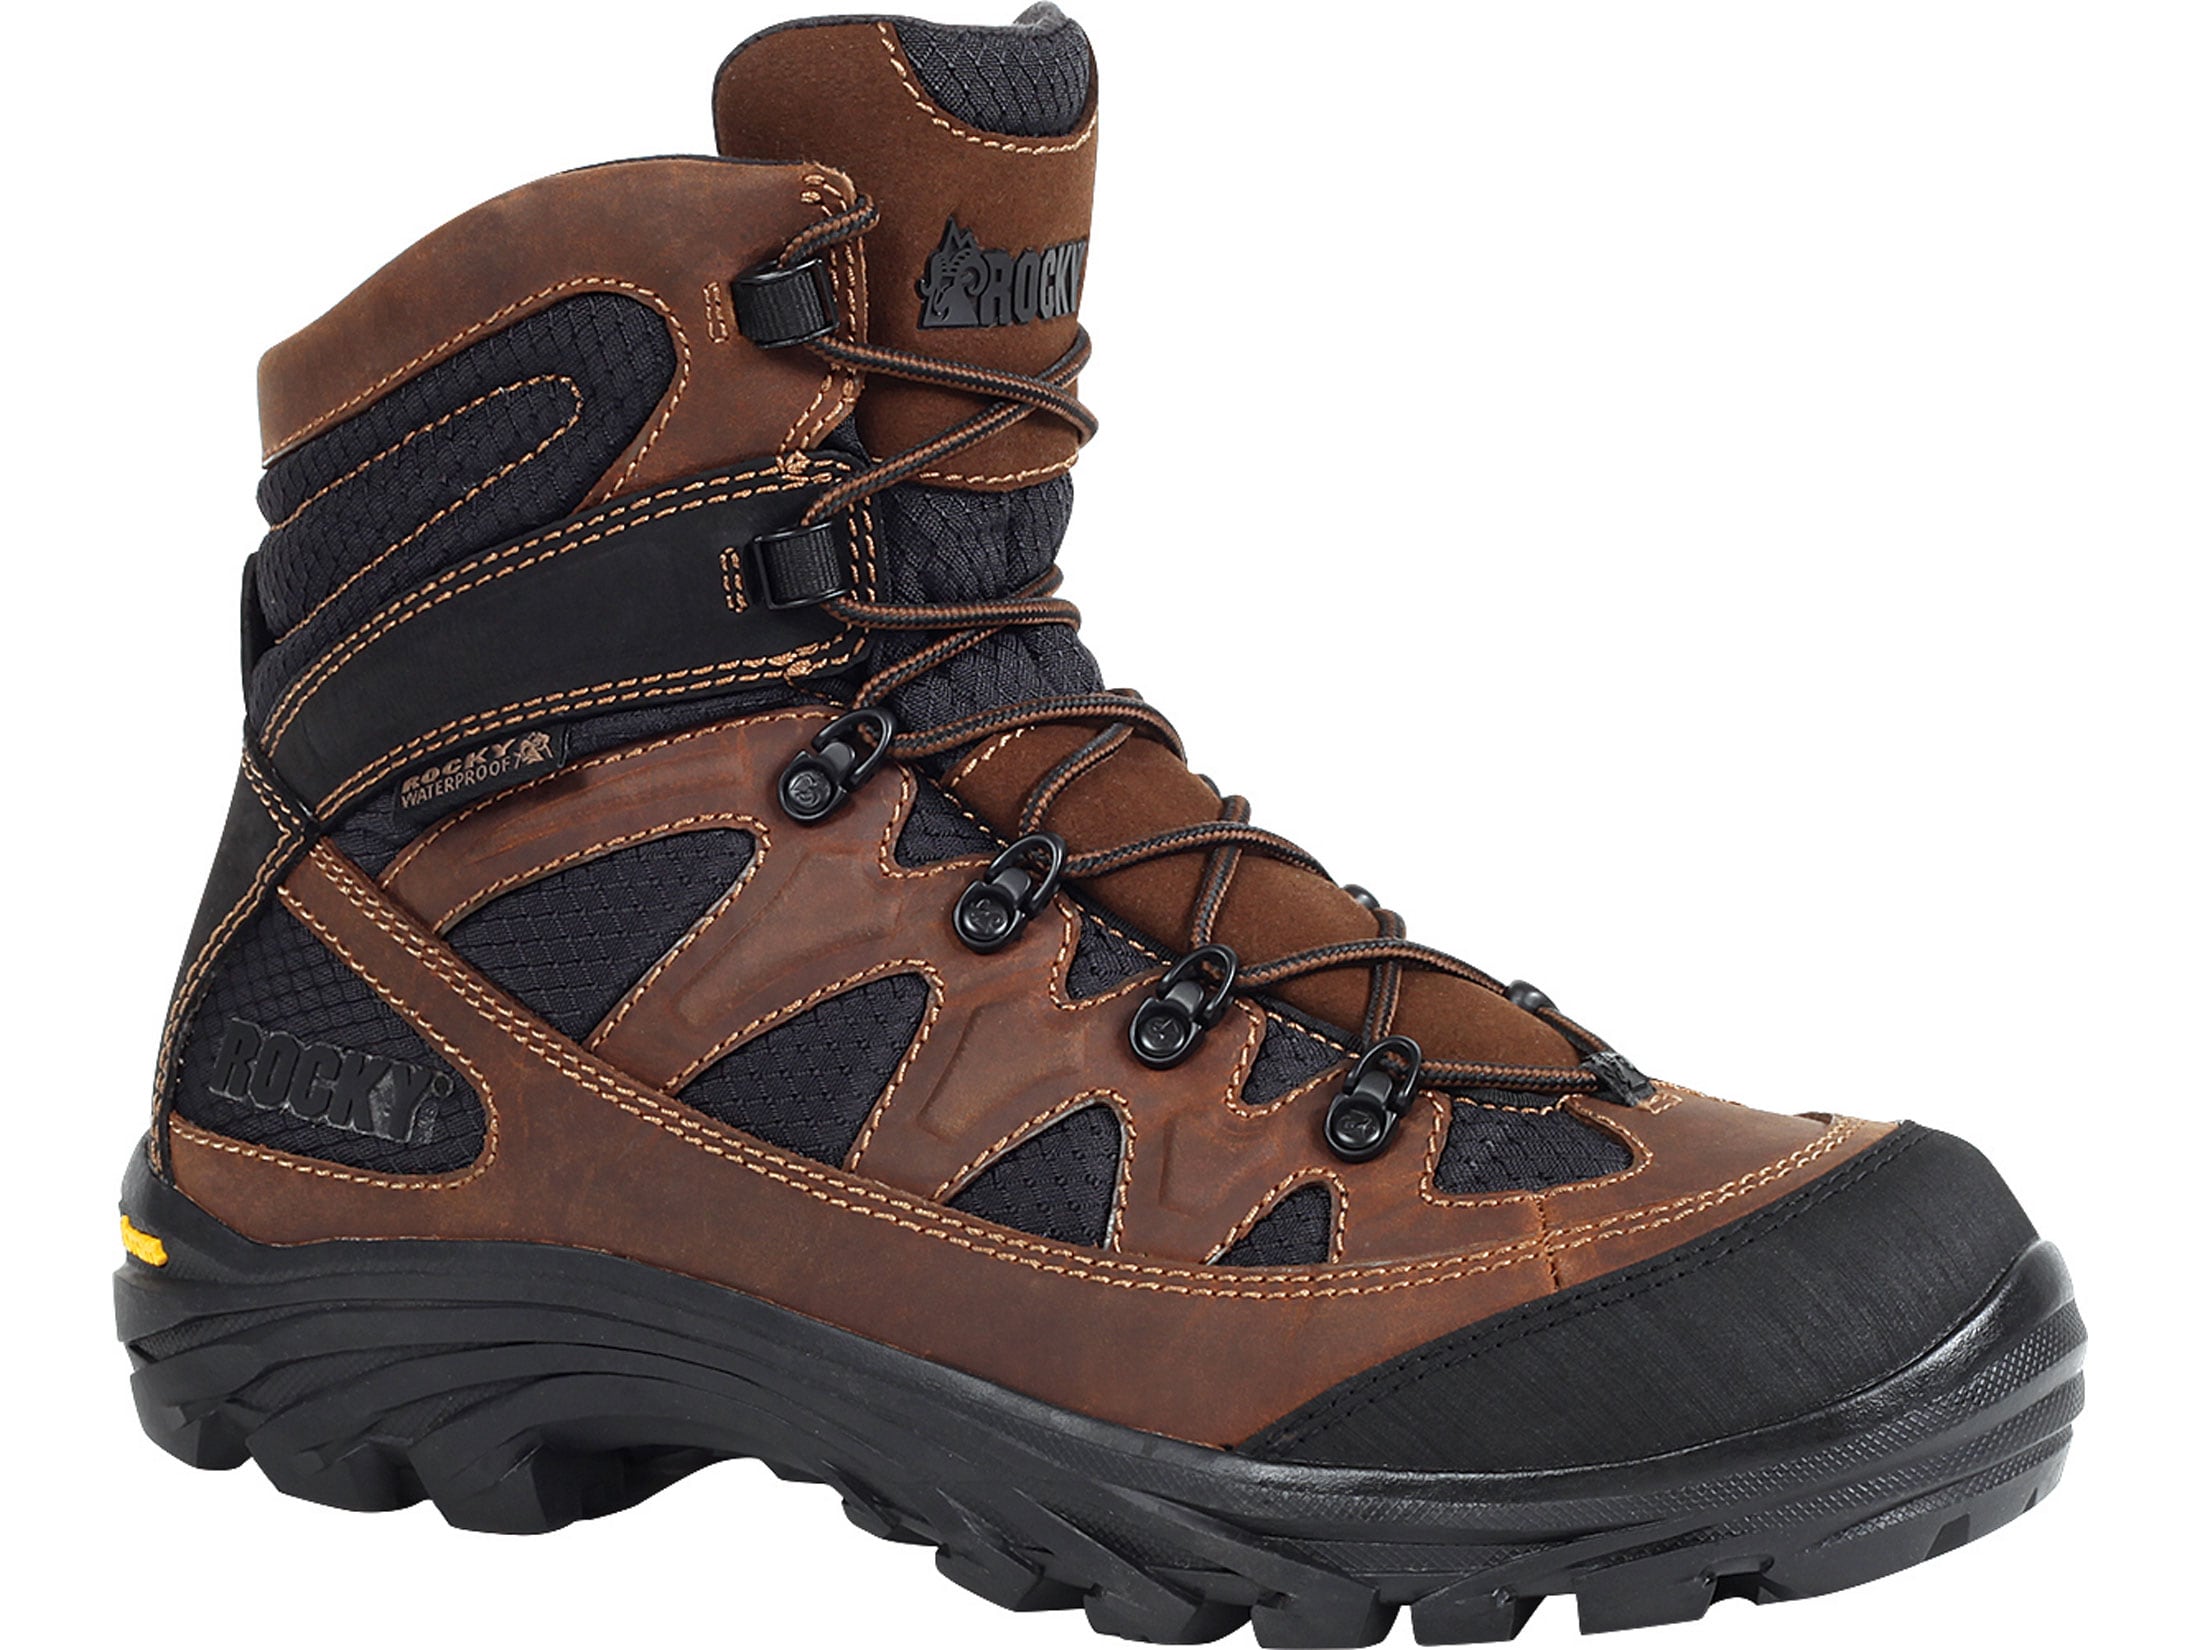 Rocky RidgeTop 6 Hiking Boots Leather Brown Black Men's 13 D